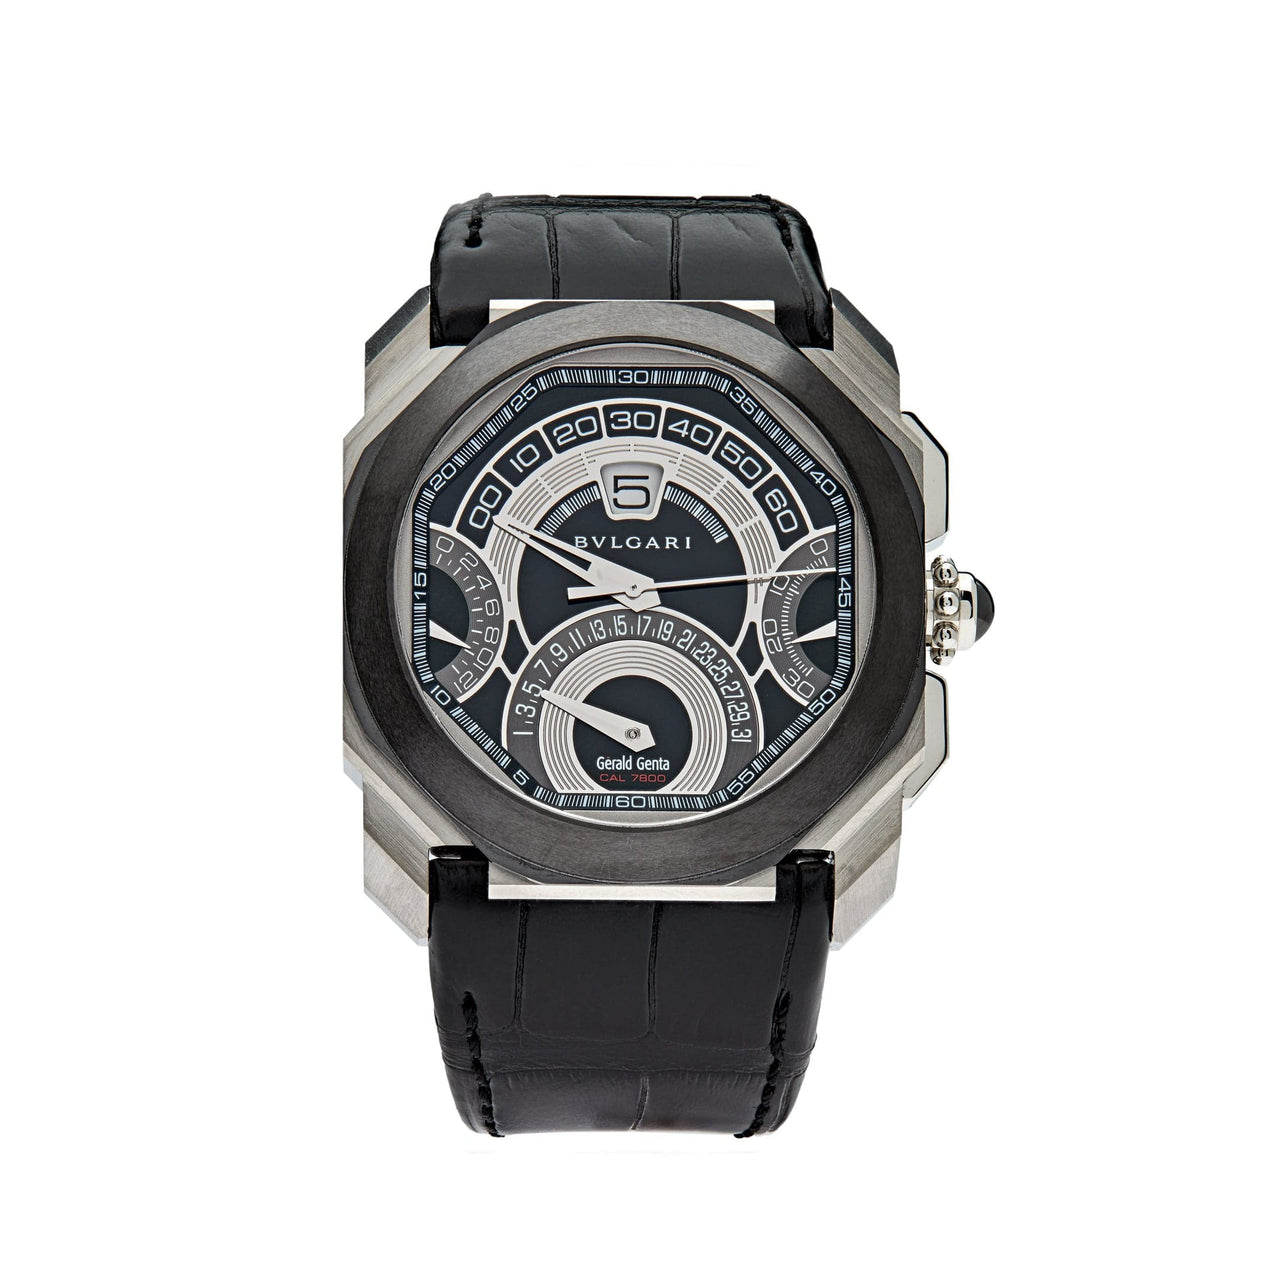 Luxury Watch Bvlgari OCTO RETROGRADI Chronograph BGO45BSCLDCHQR-101882 wrist aficionado